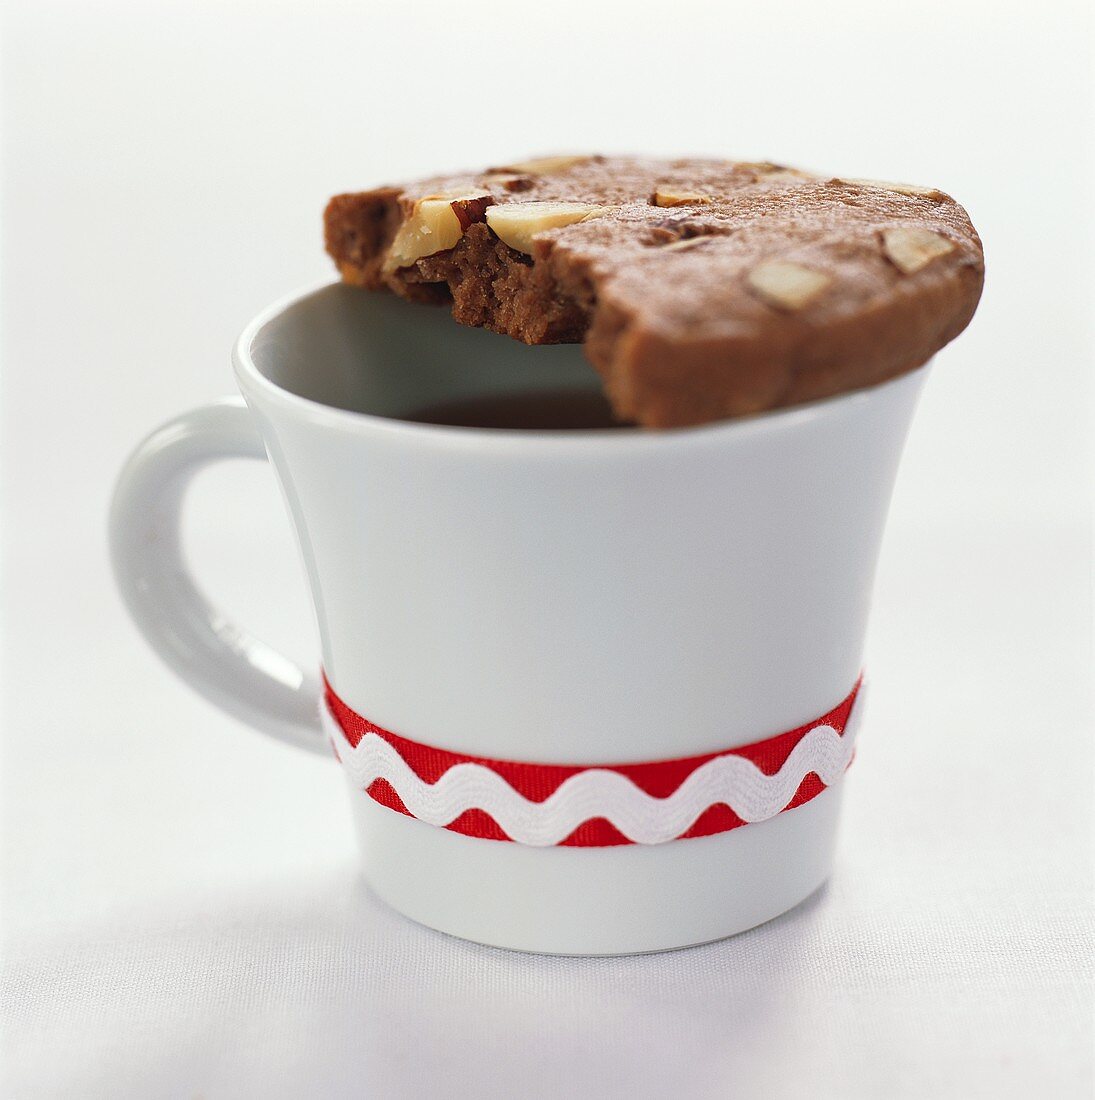 Chocolate hazelnut cookie on a cup